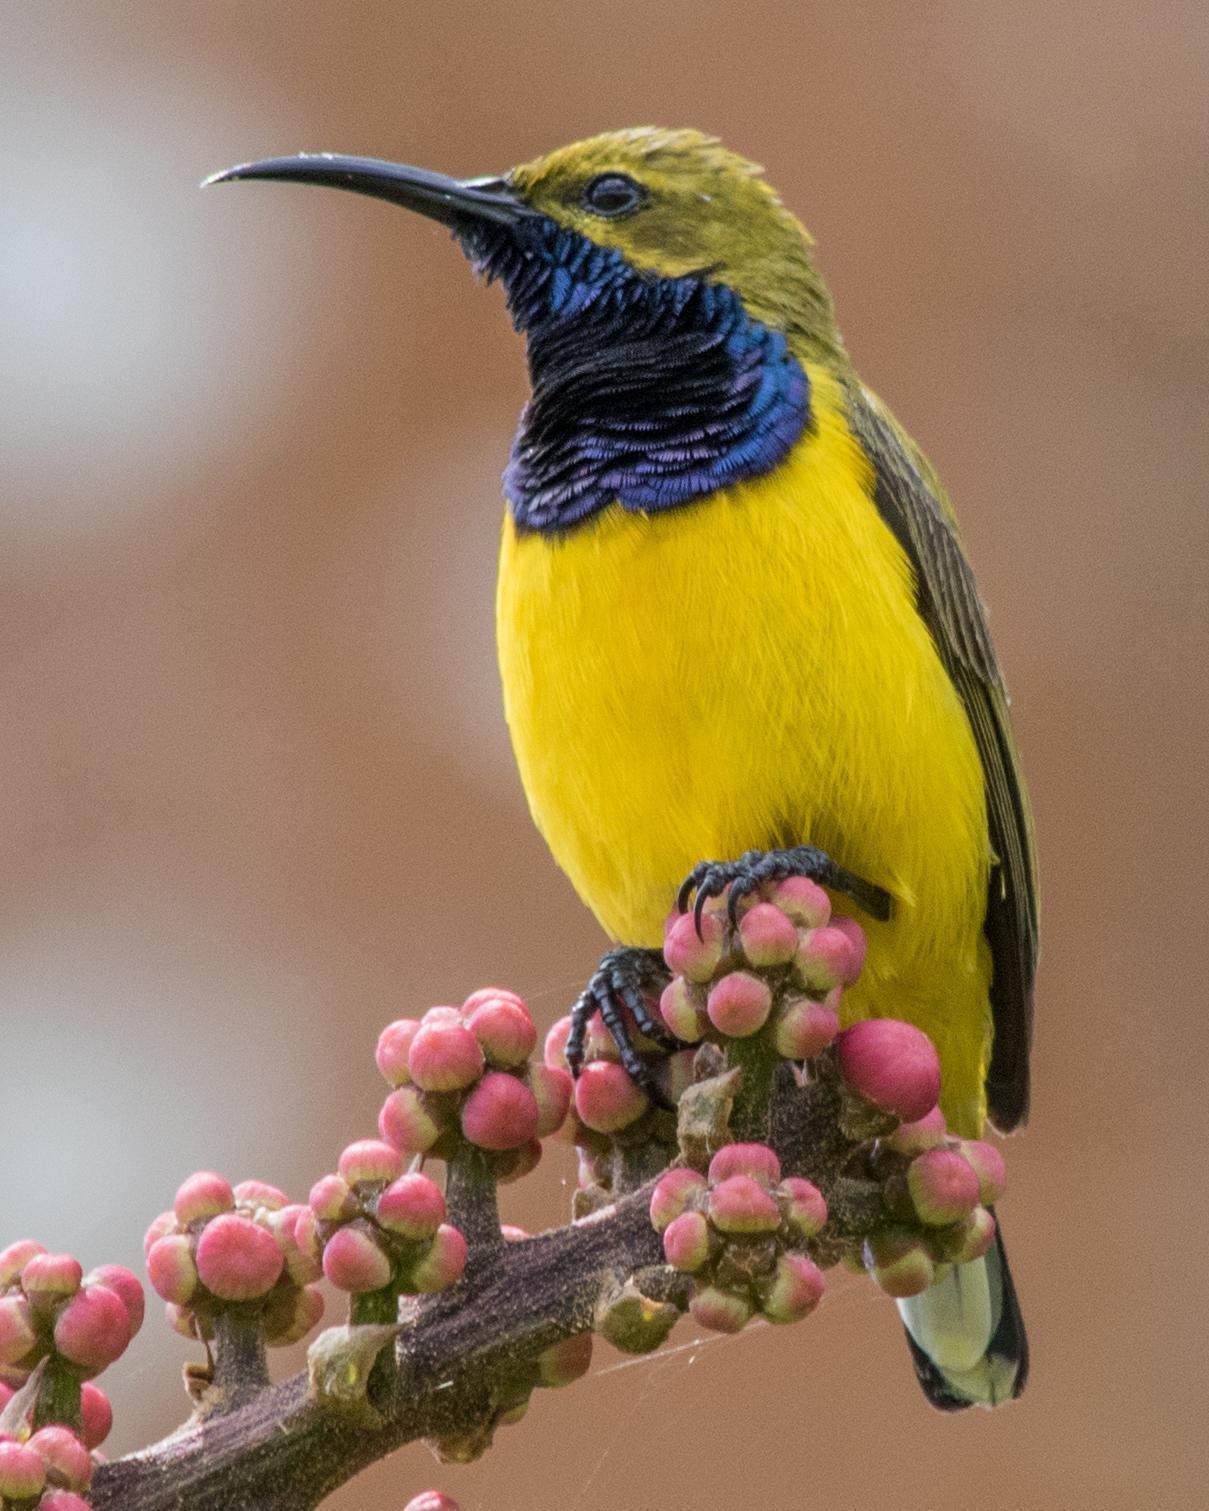 Olive-backed Sunbird Photo by Mark Baldwin